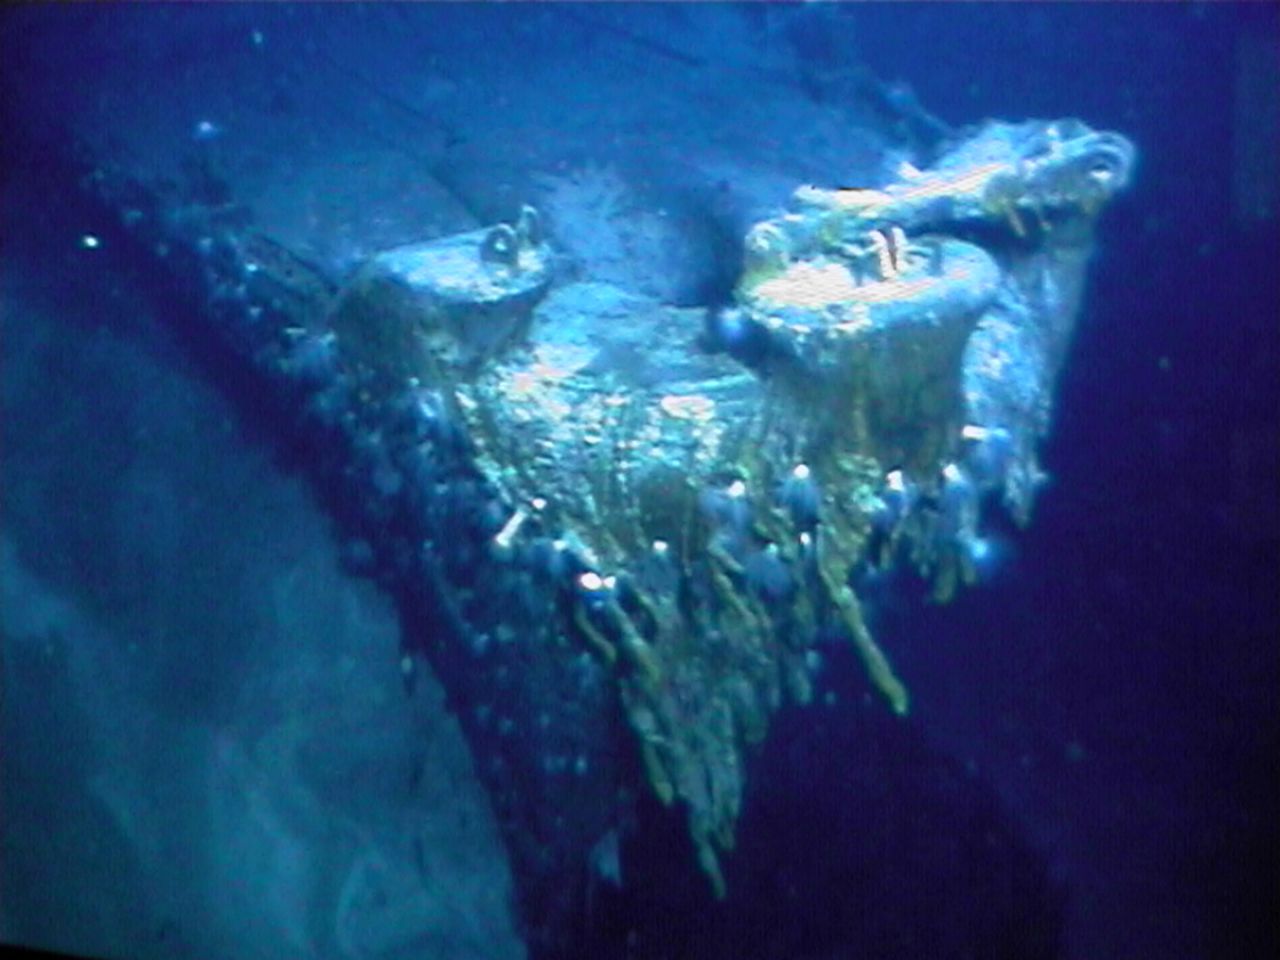 Bismarck is a menacing but remarkably well-preserved shipwreck, says Capt. MacClaren.